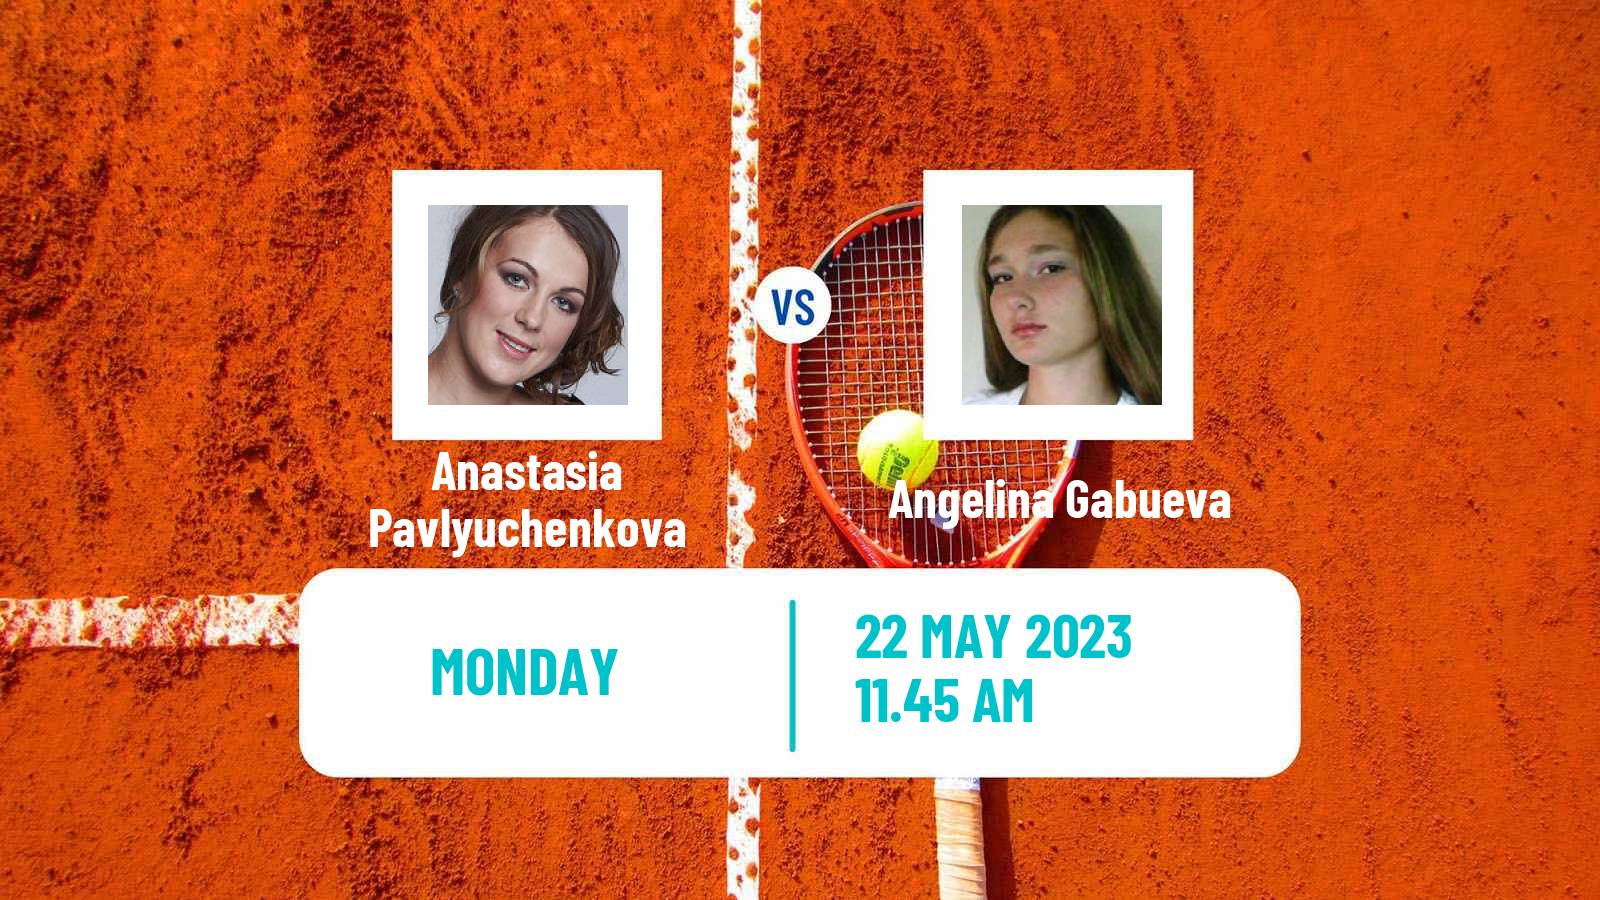 Tennis WTA Strasbourg Anastasia Pavlyuchenkova - Angelina Gabueva